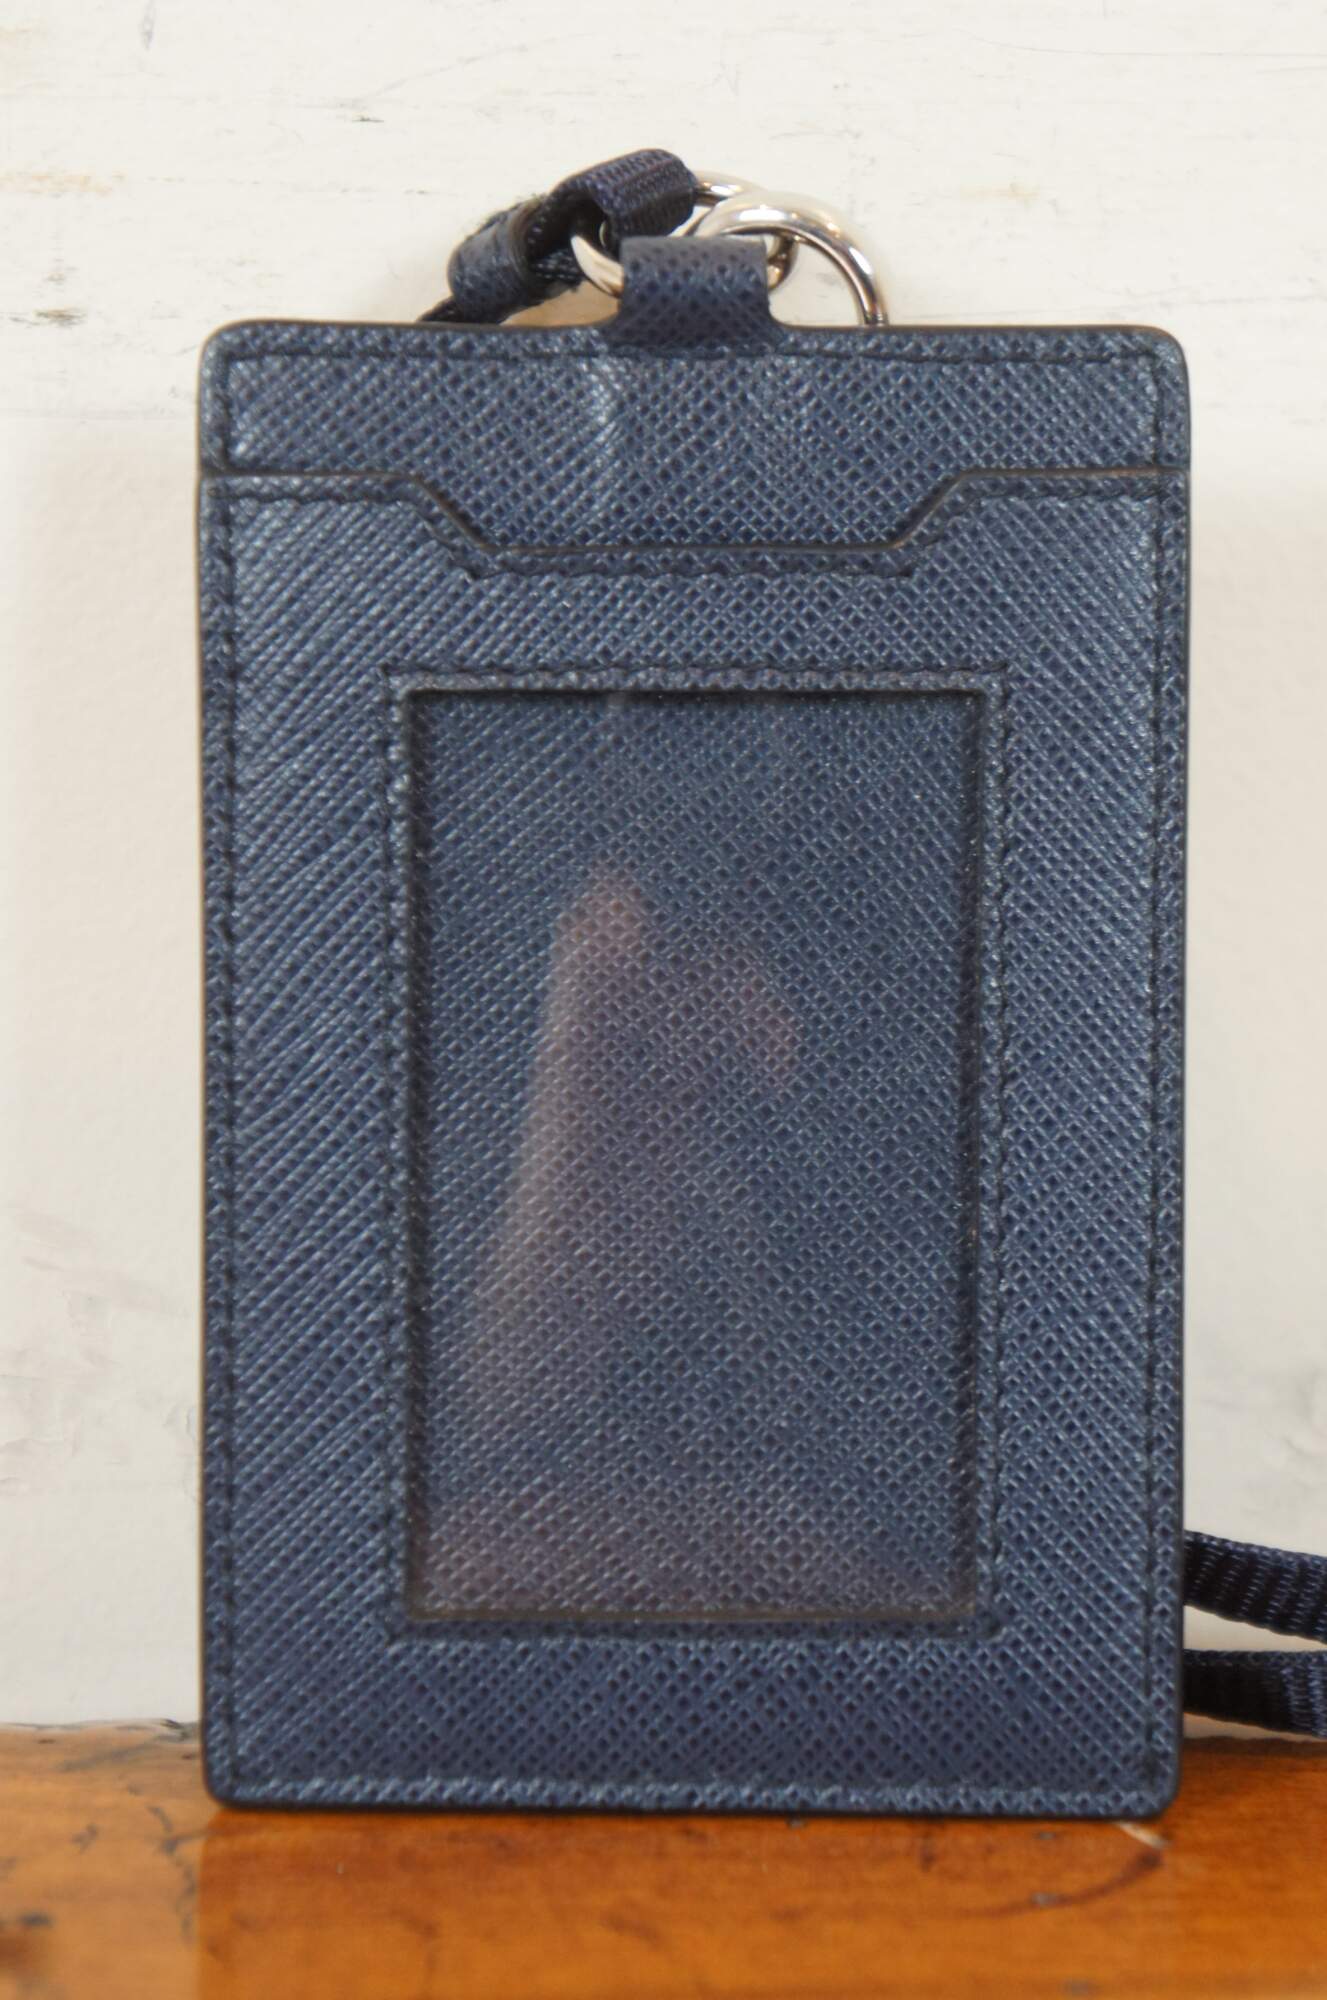 Prada Blue Saffiano Leather Badge Holder